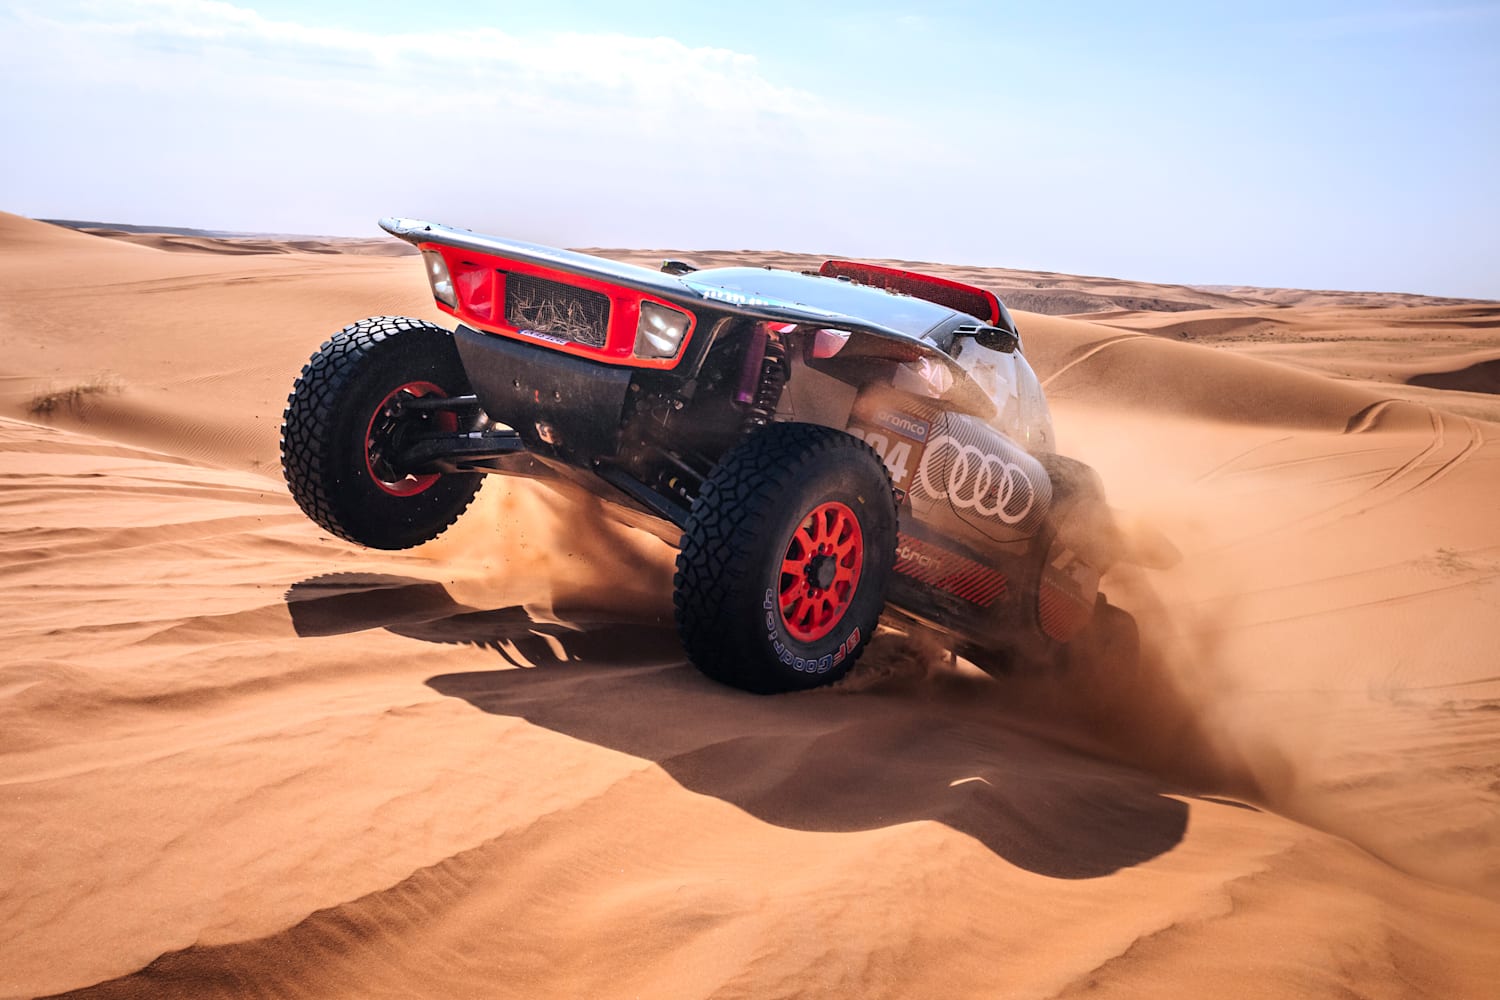 Dakar - Carlos Sainz présente son buggy SMG